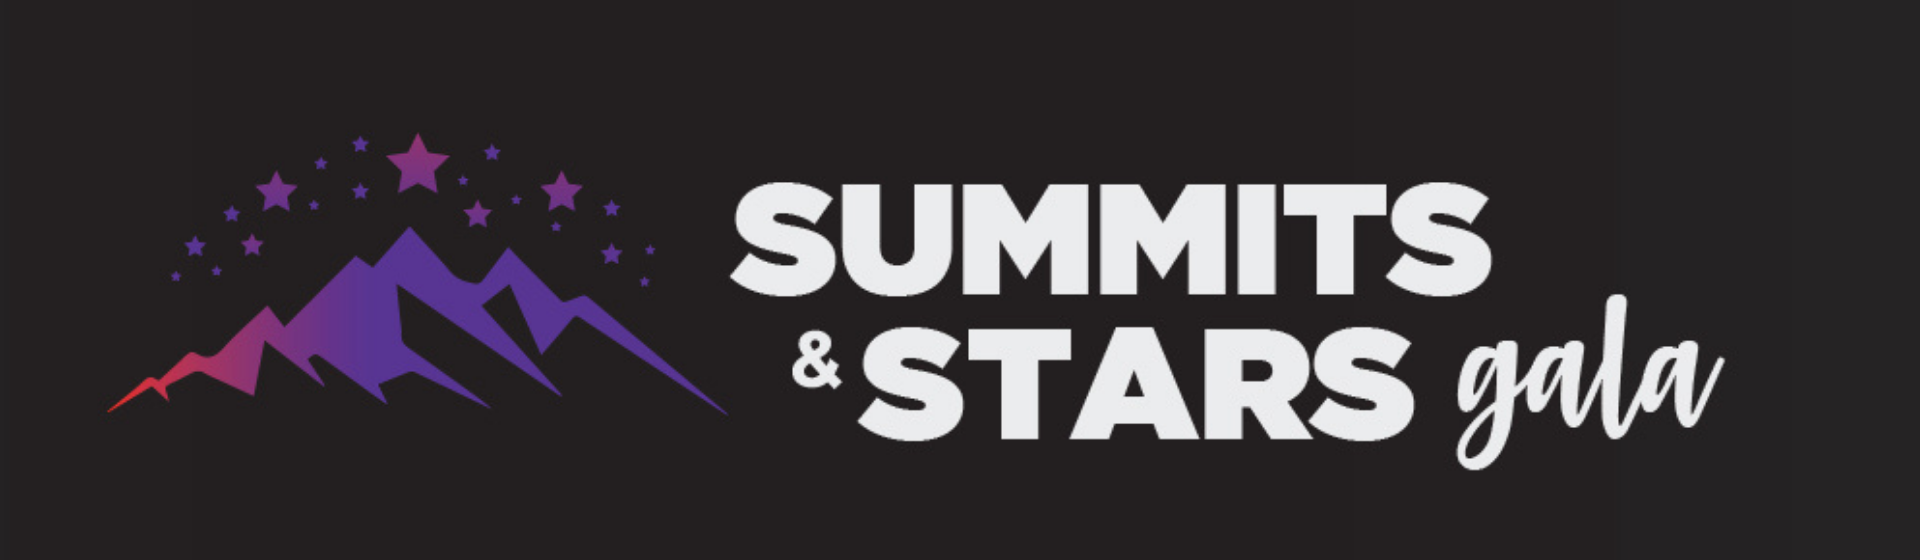 Summits and Stars Gala logo